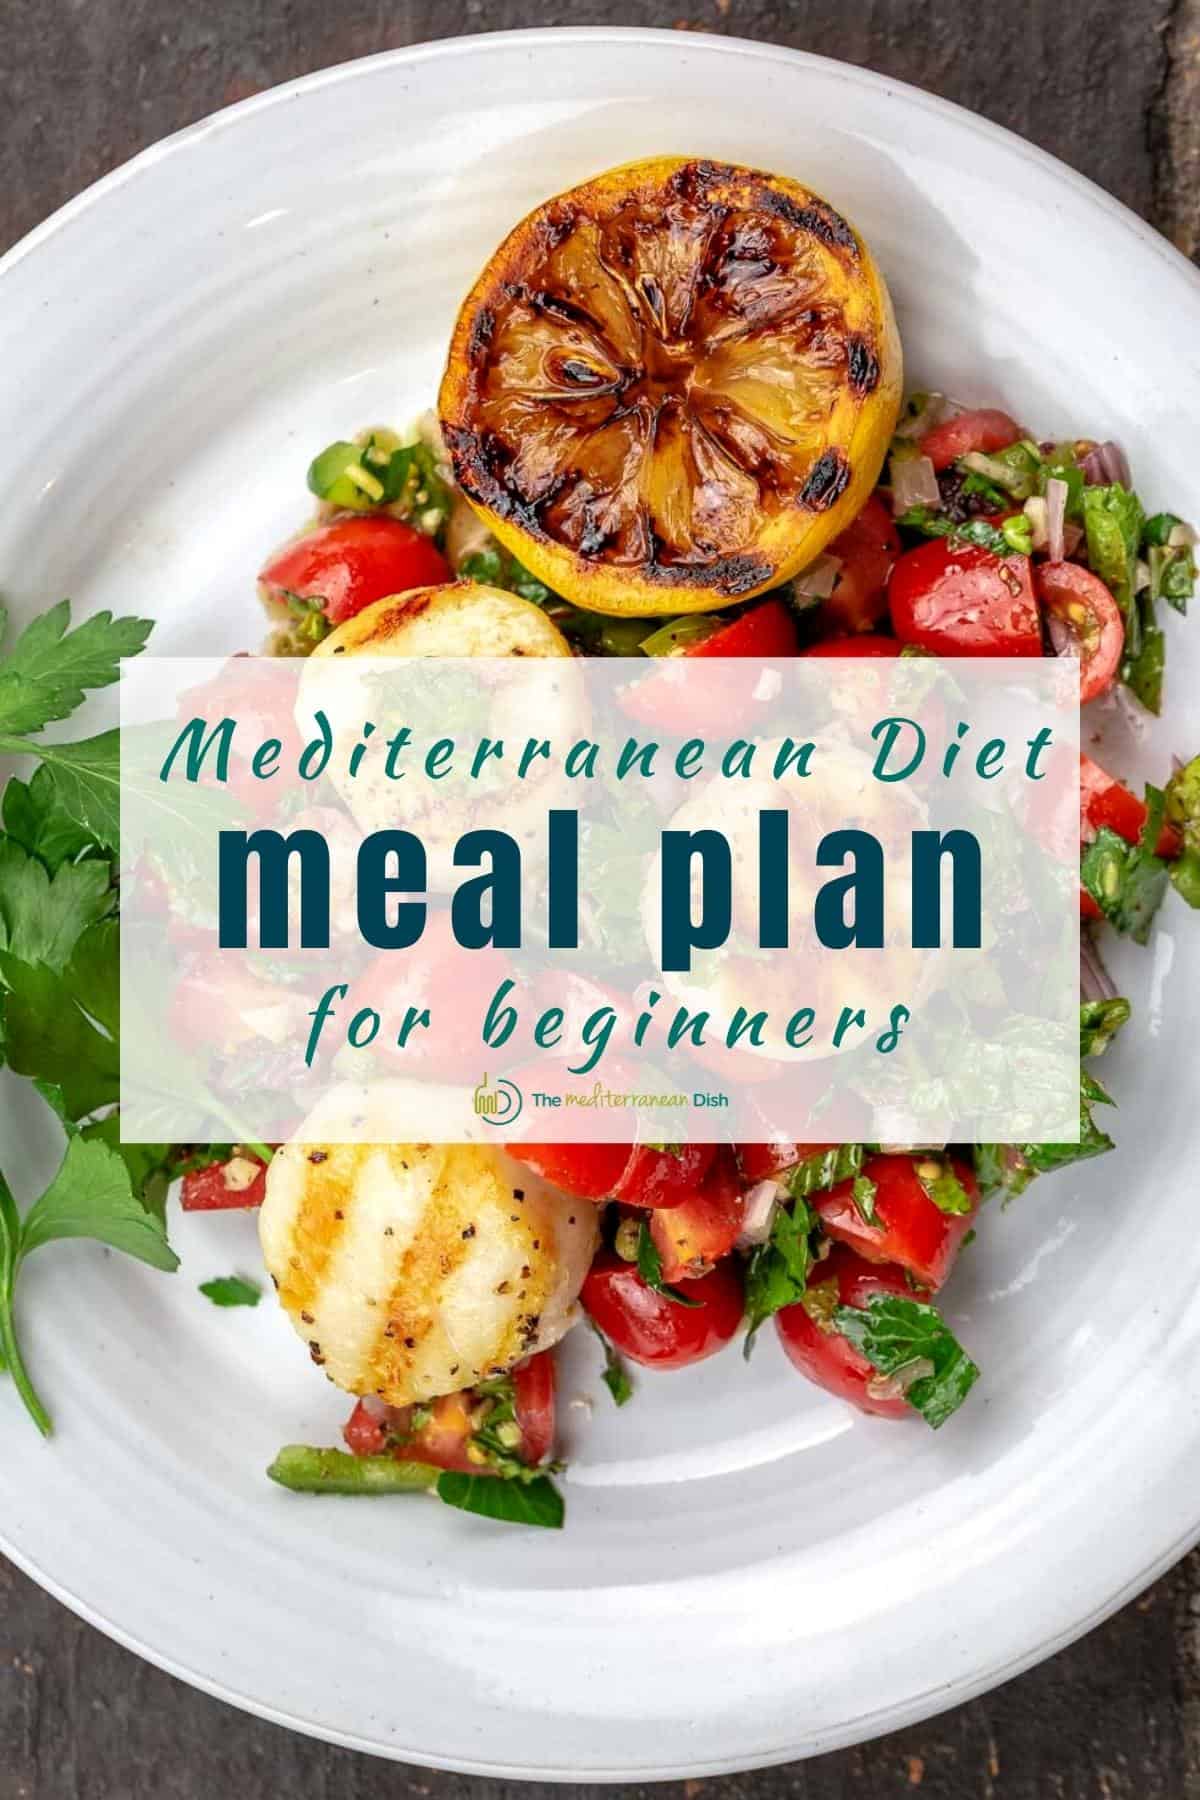 A banner for a Mediterranean diet meal plan